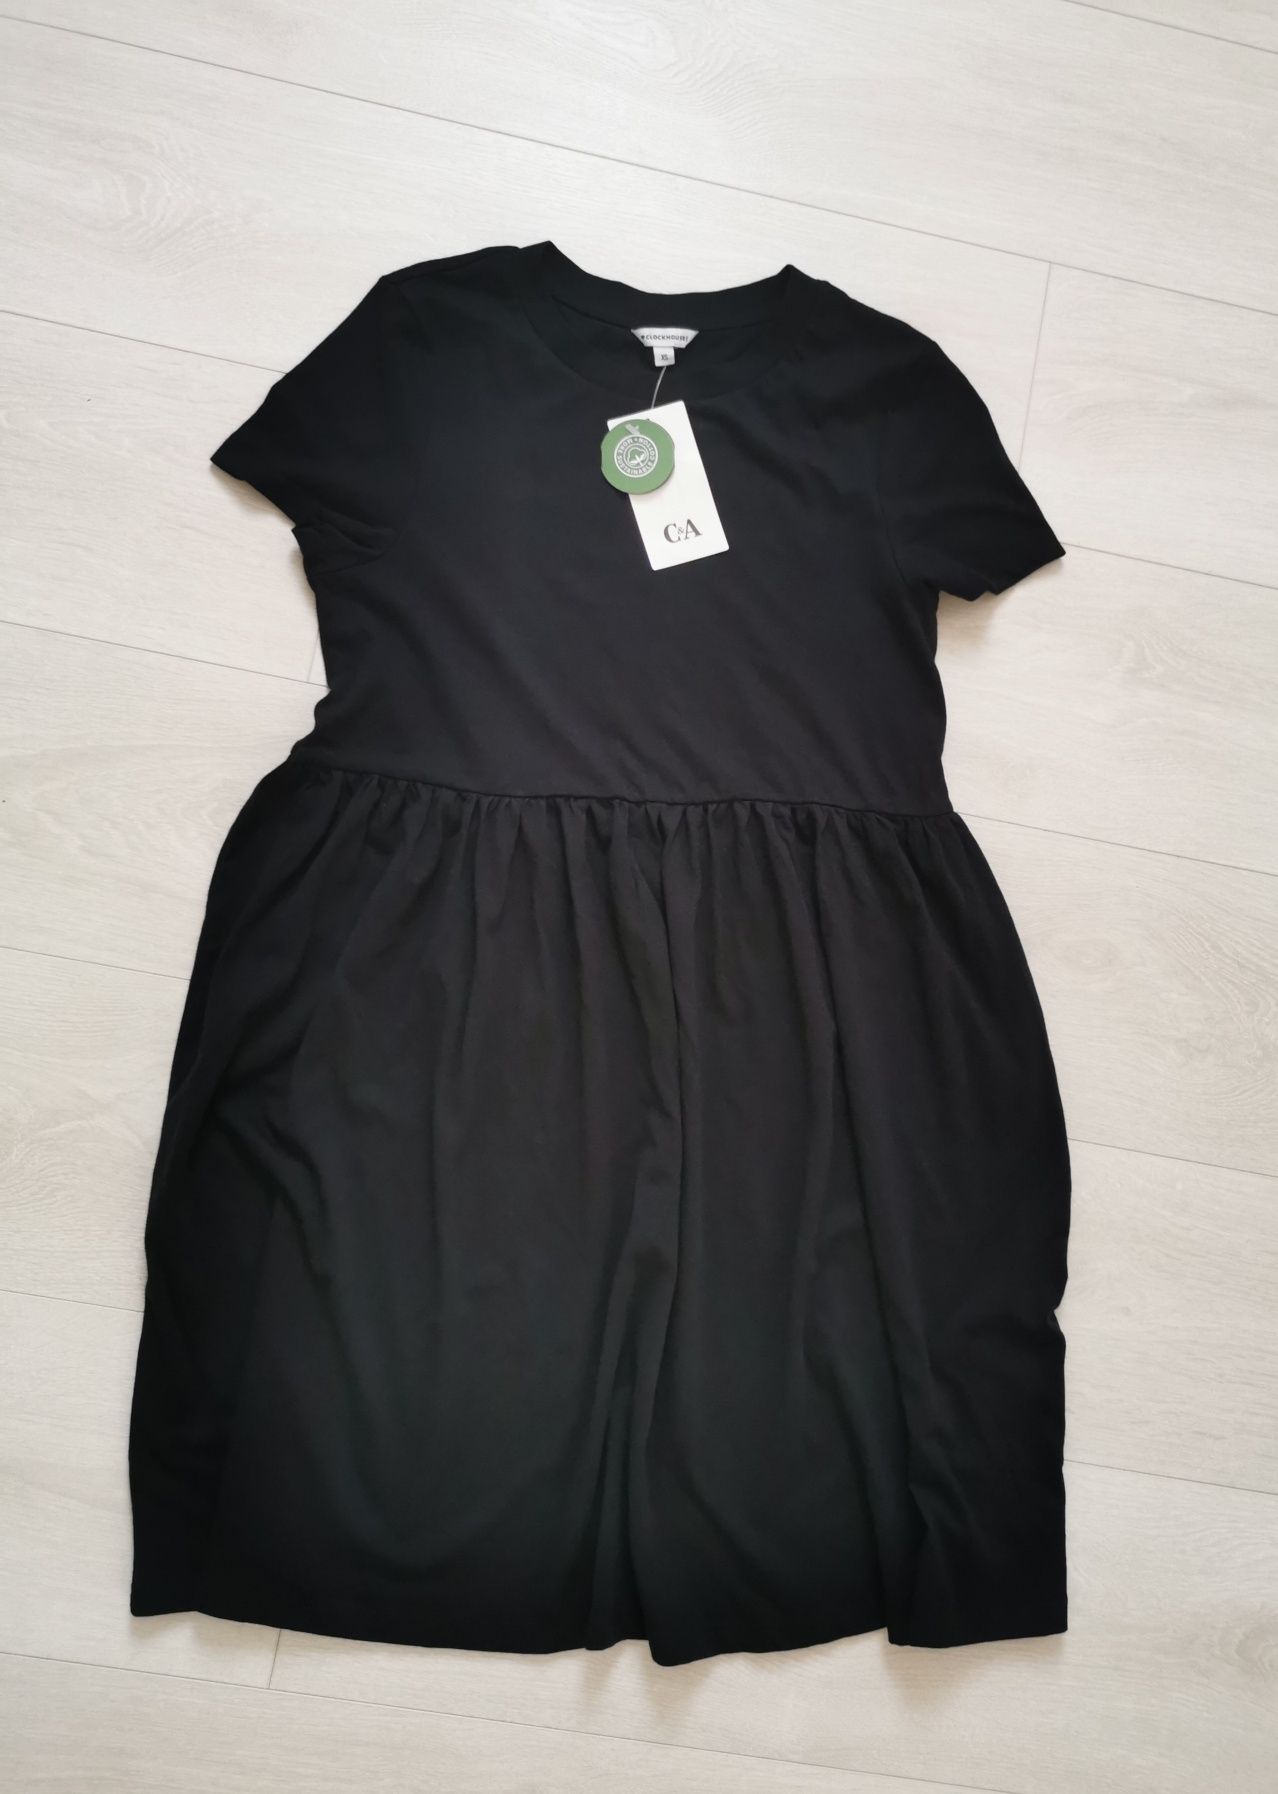 Чорна коротка літня сукня C&A. XS /S. Нова. Платье чёрное короткое лет